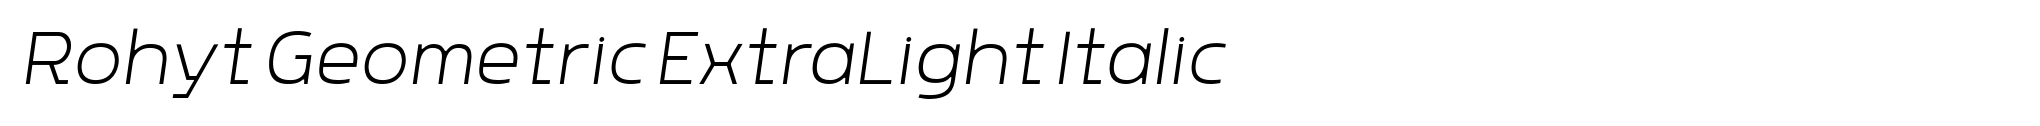 Rohyt Geometric ExtraLight Italic image